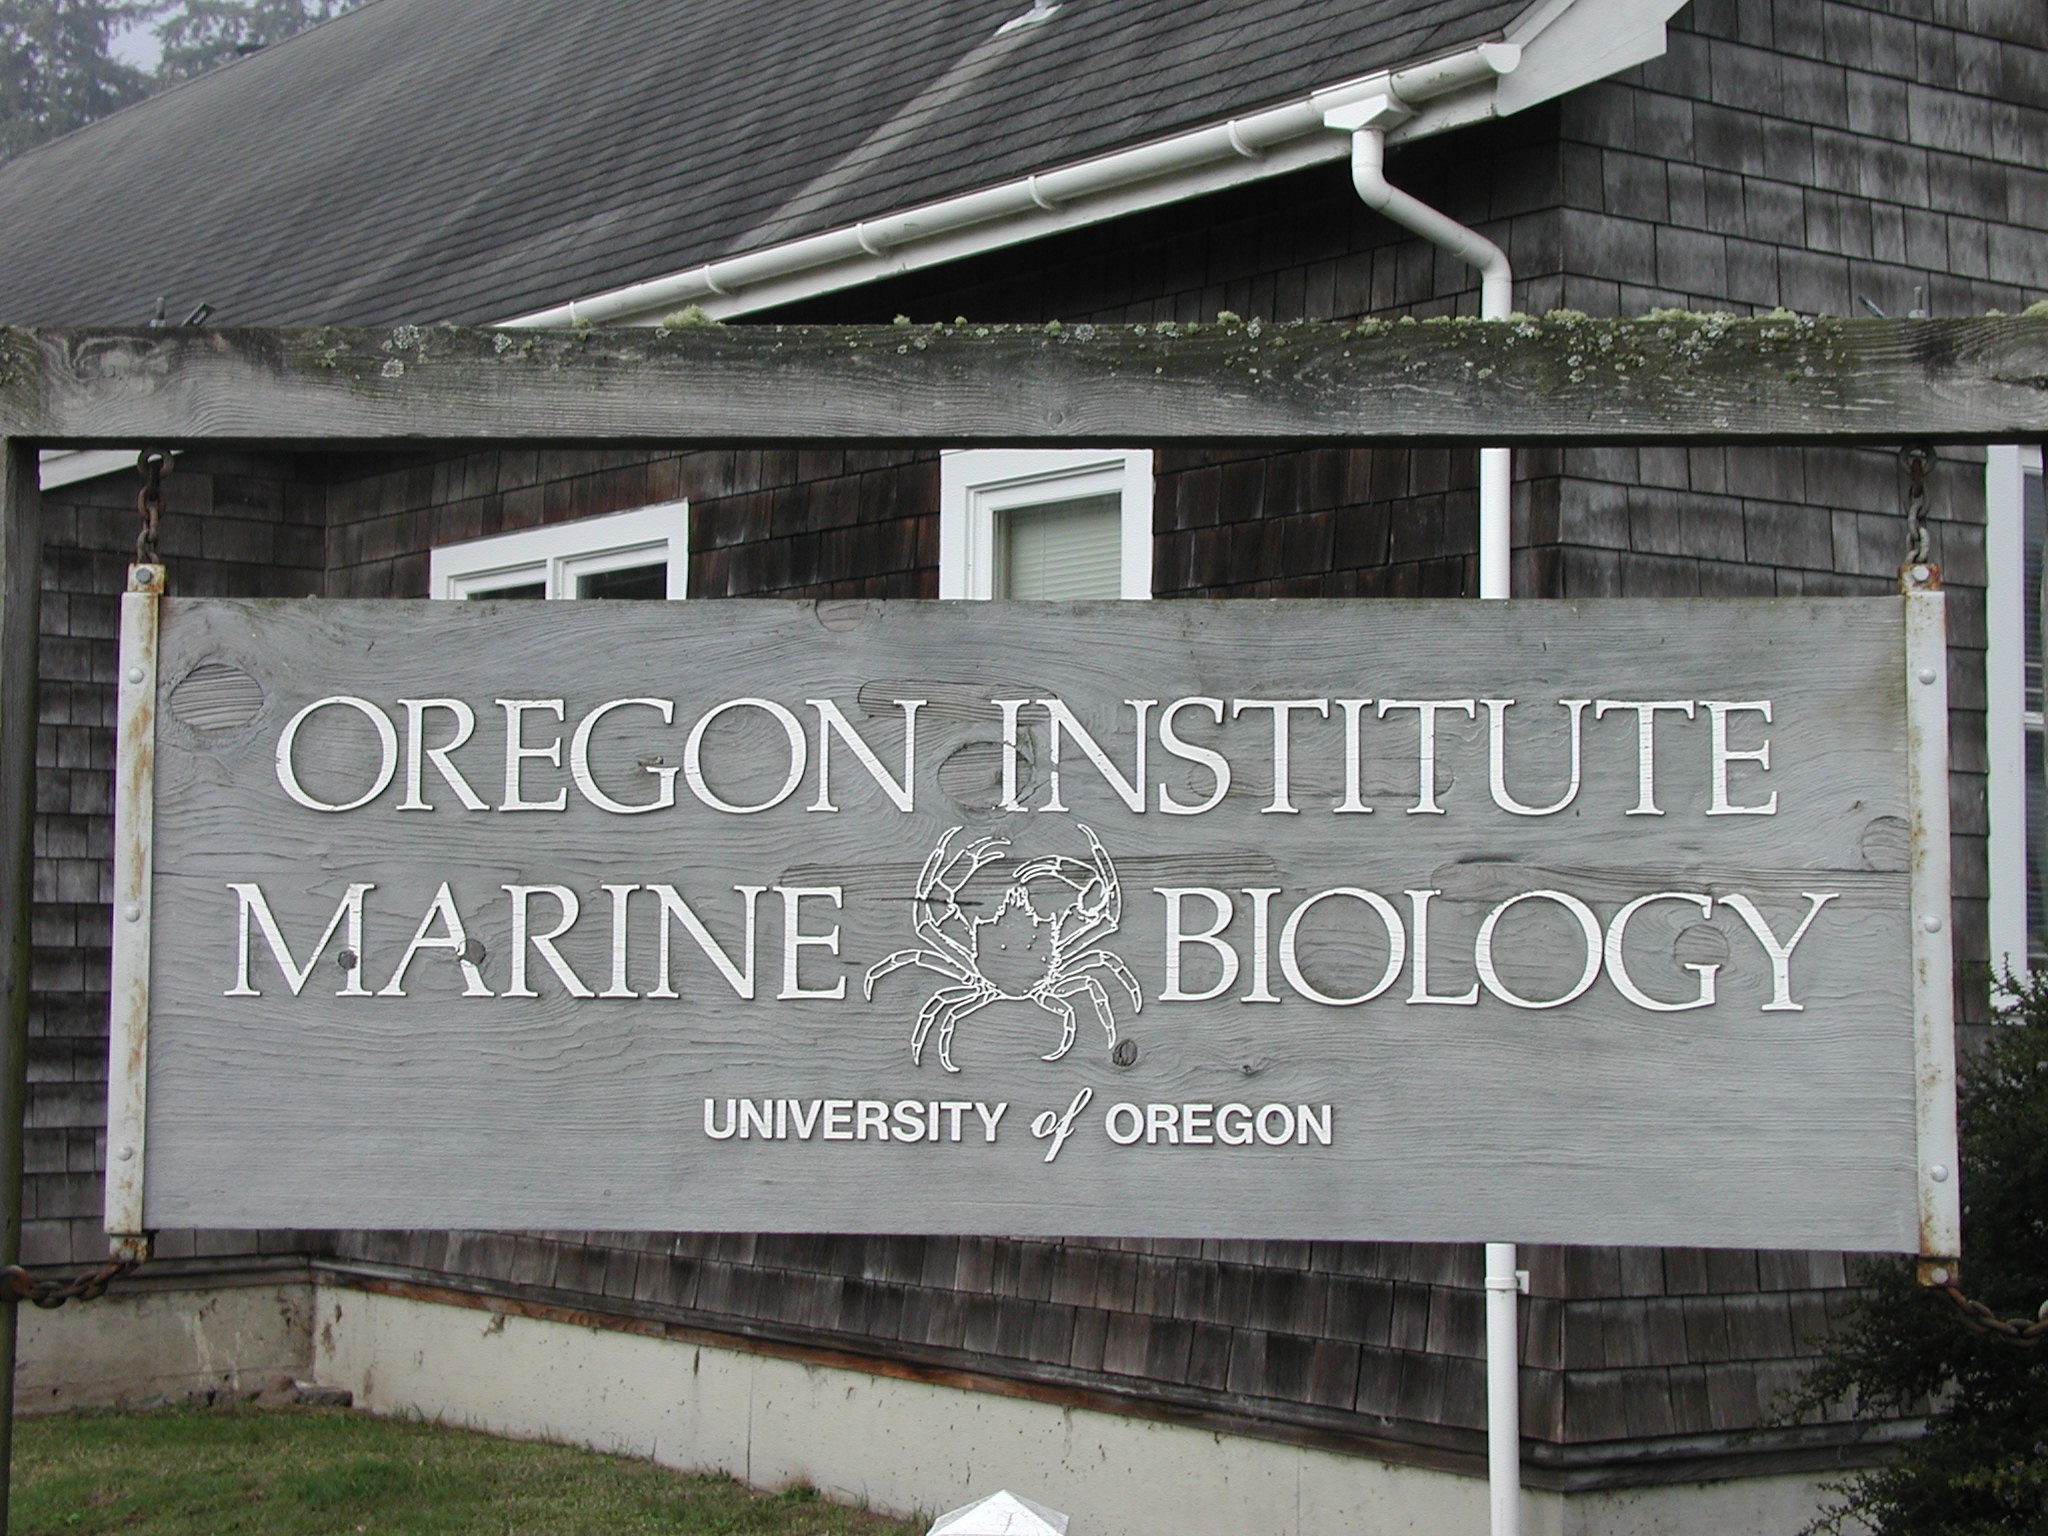 marine biology